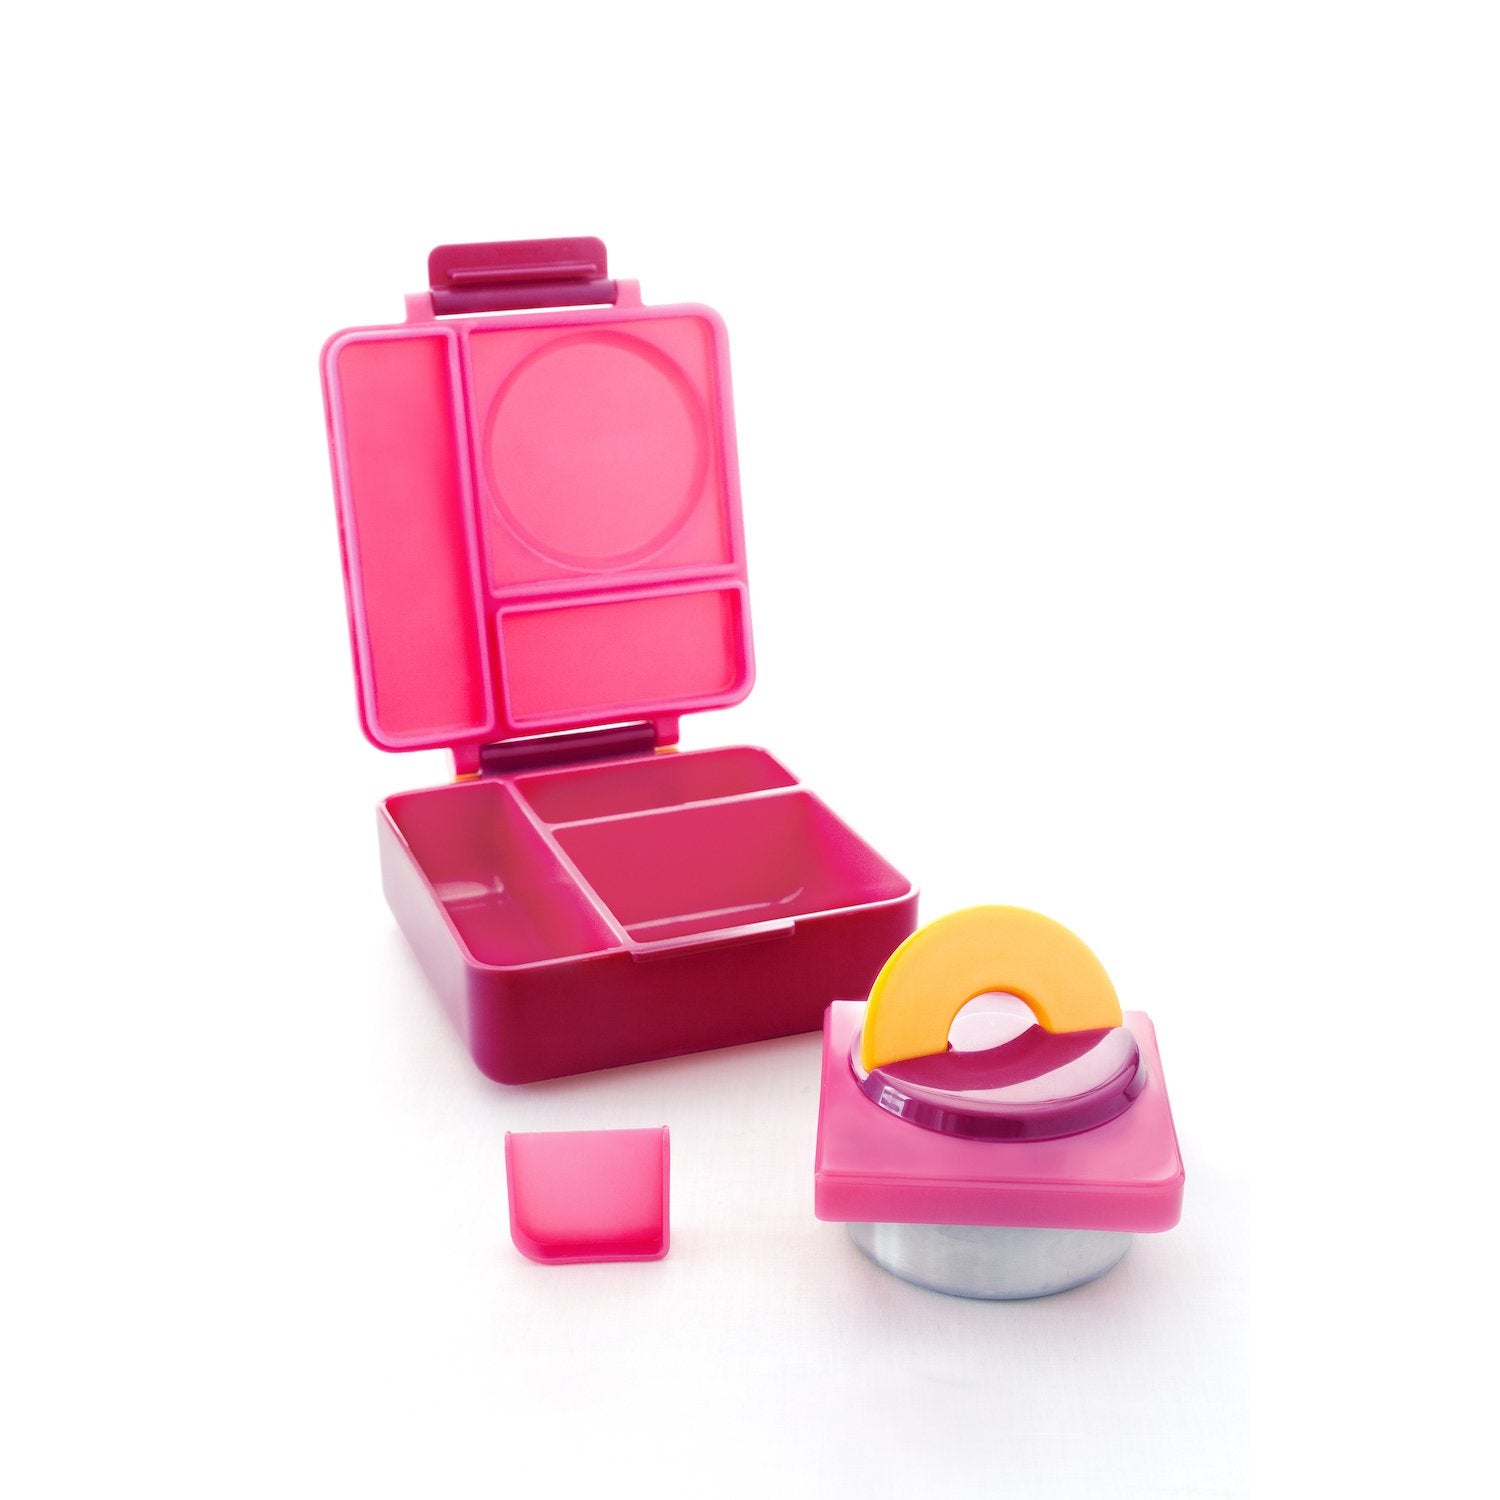 Omie Box - Divider, Teal (Omie Box Pink)